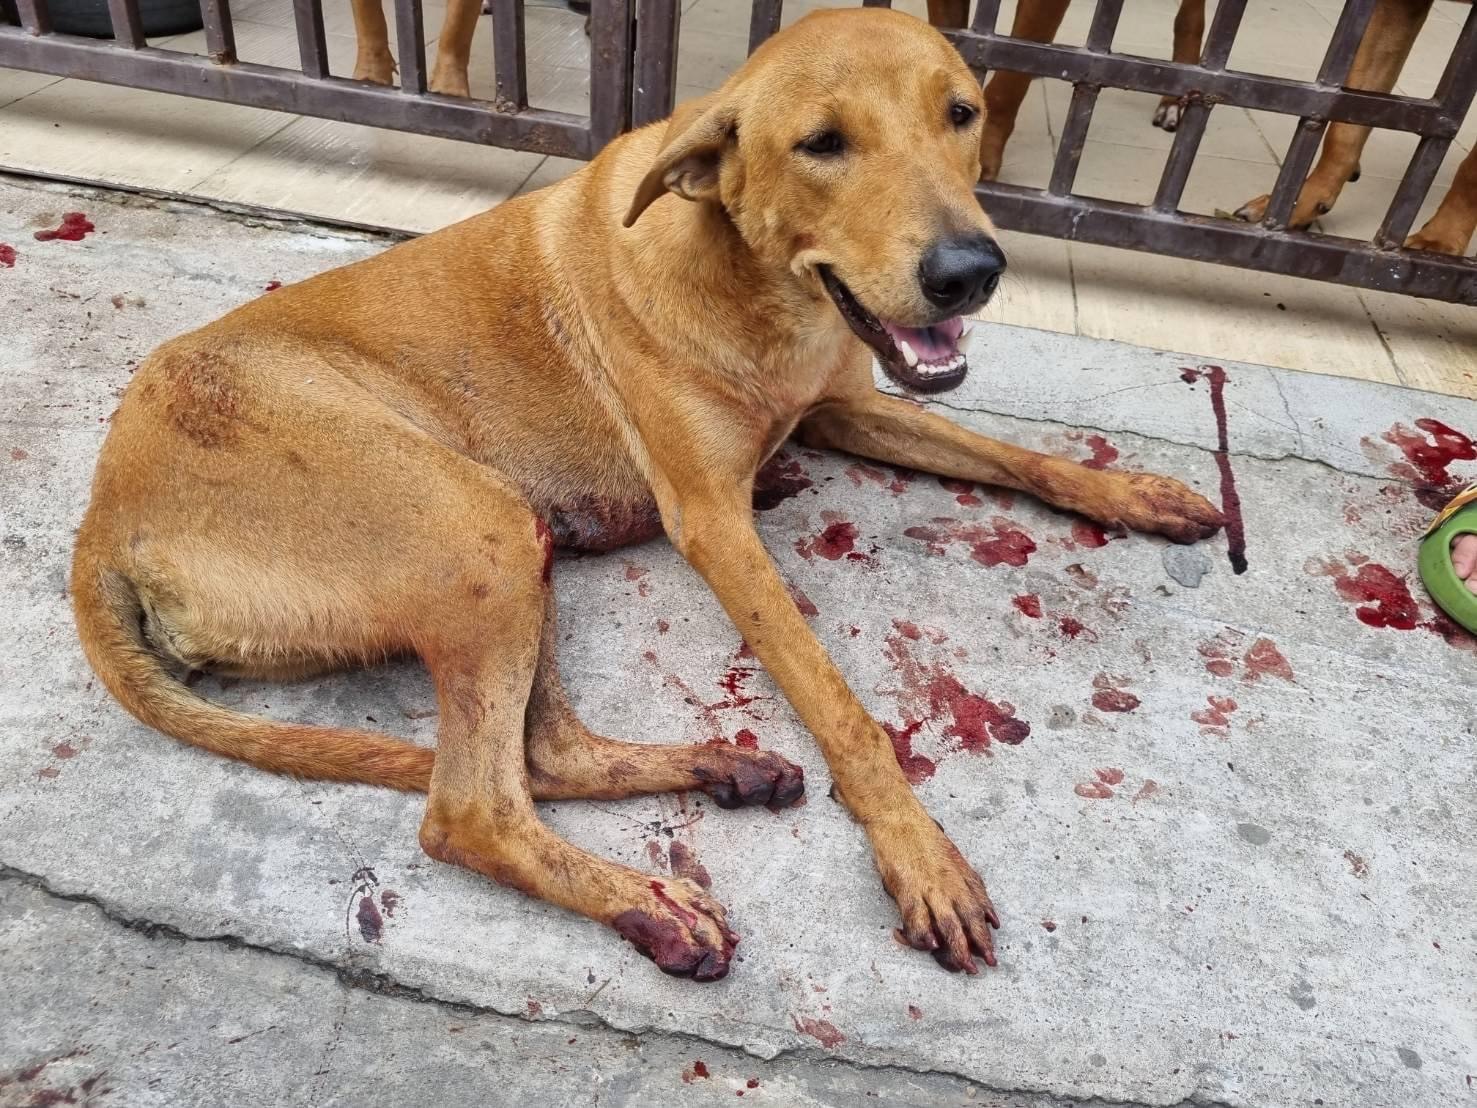 A stray dog was brutally beaten, Laem Chabang city, Chonburi Province